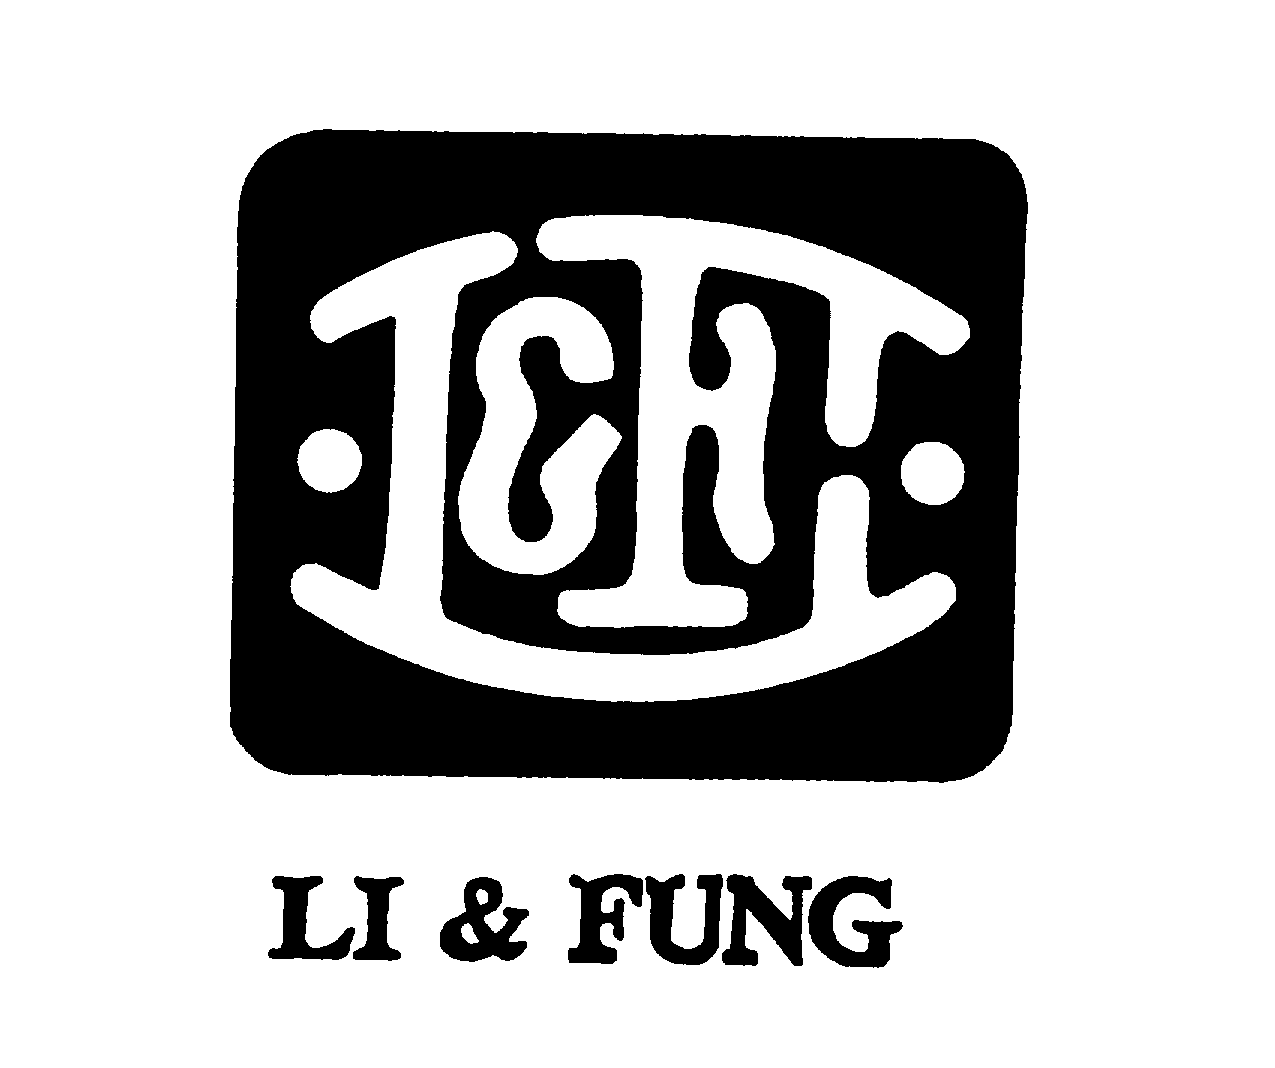 Trademark Logo LI & FUNG